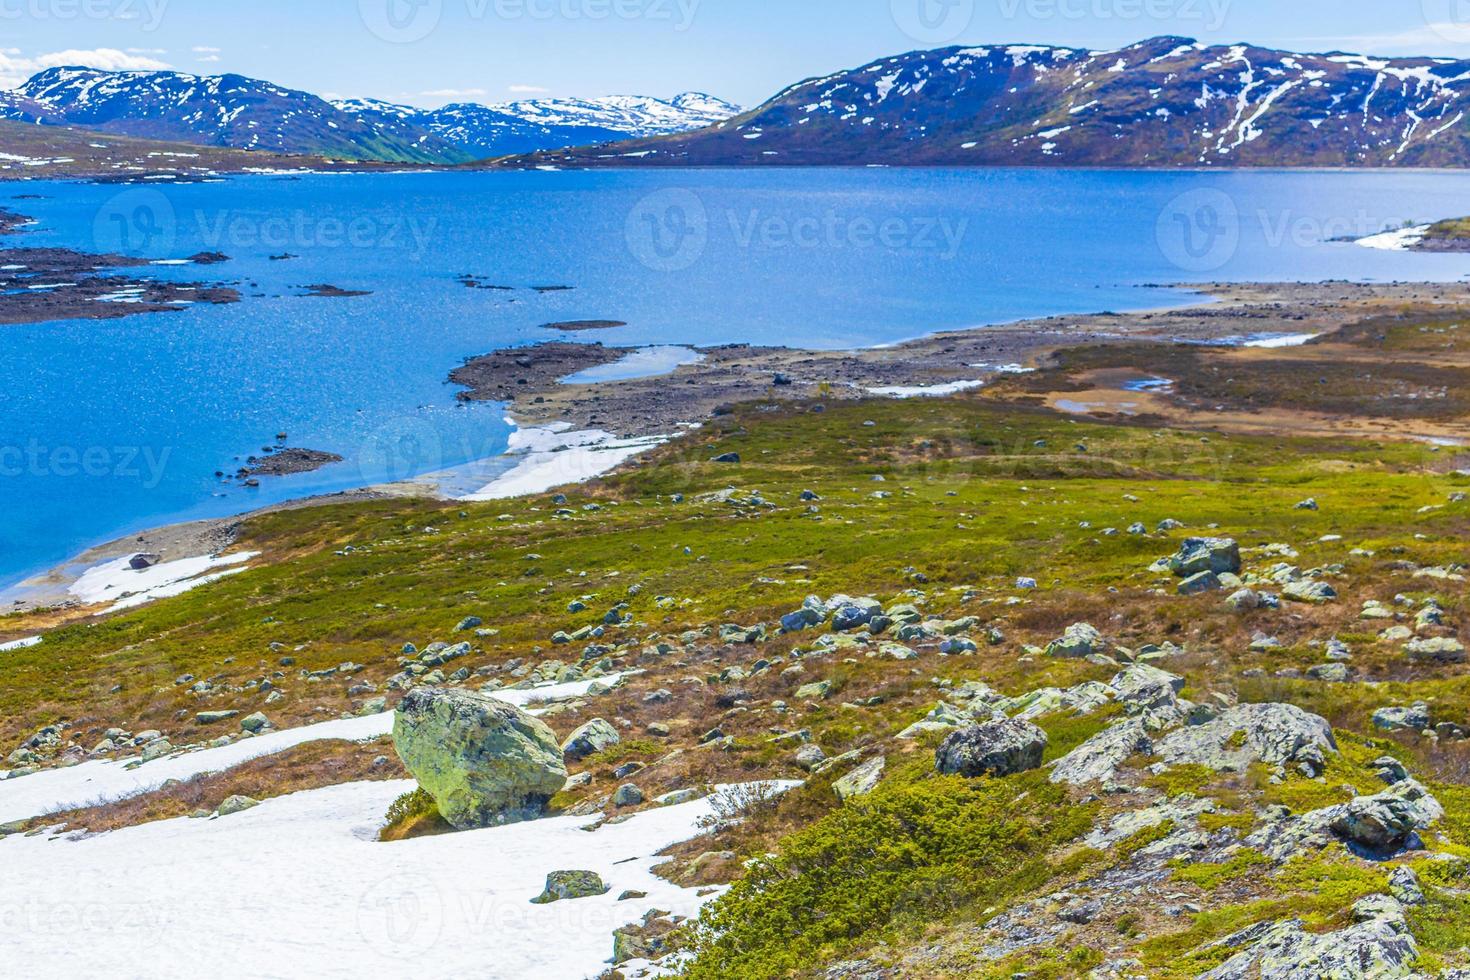 vavatn sjö panorama landskap stenblock berg Hemsedal Norge. foto